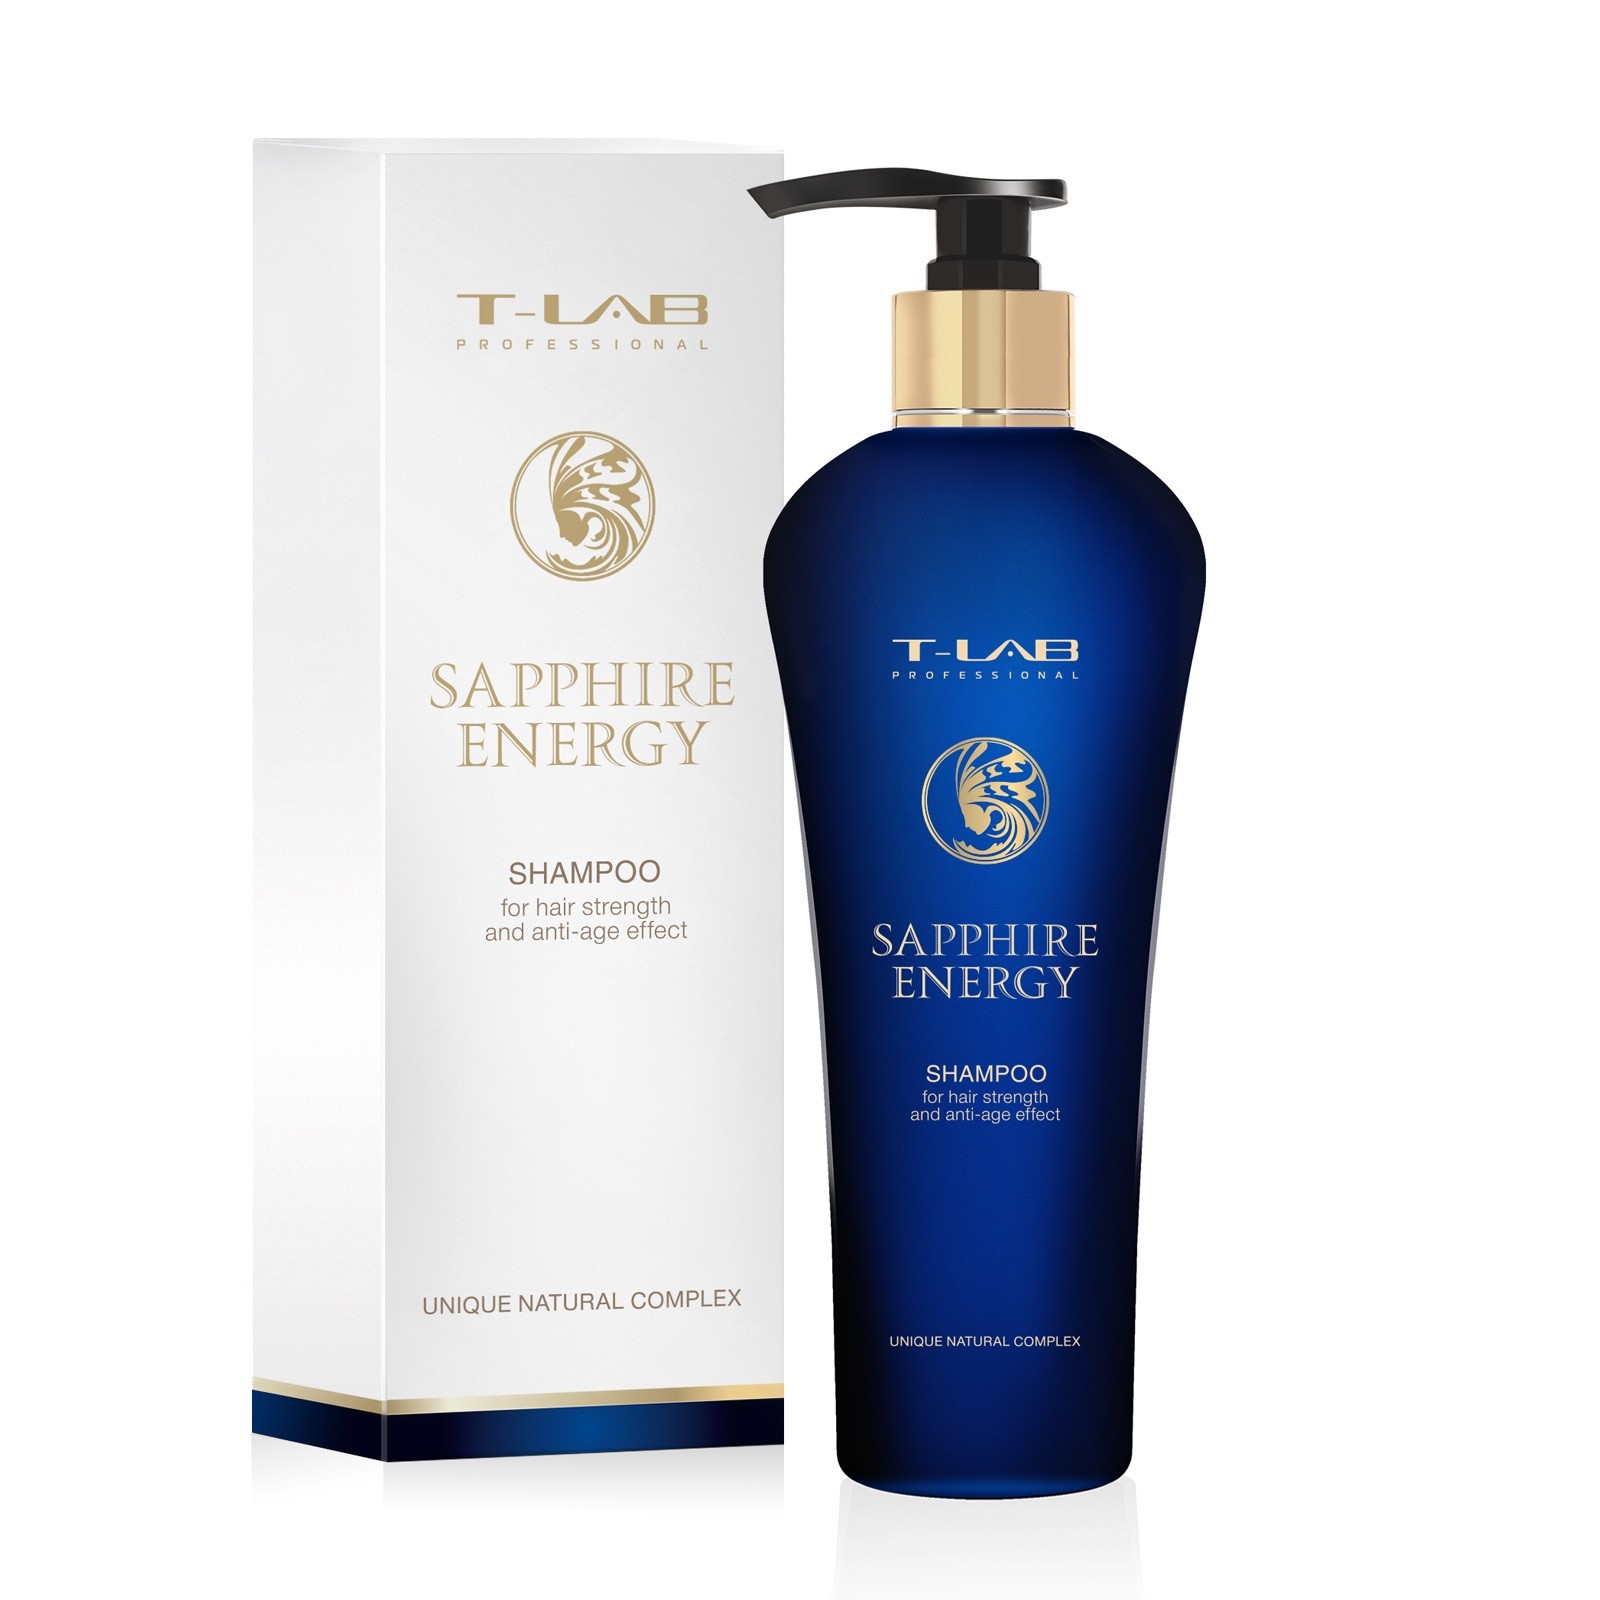 T-LAB Professional Sapphire Energy Shampoo 250ml